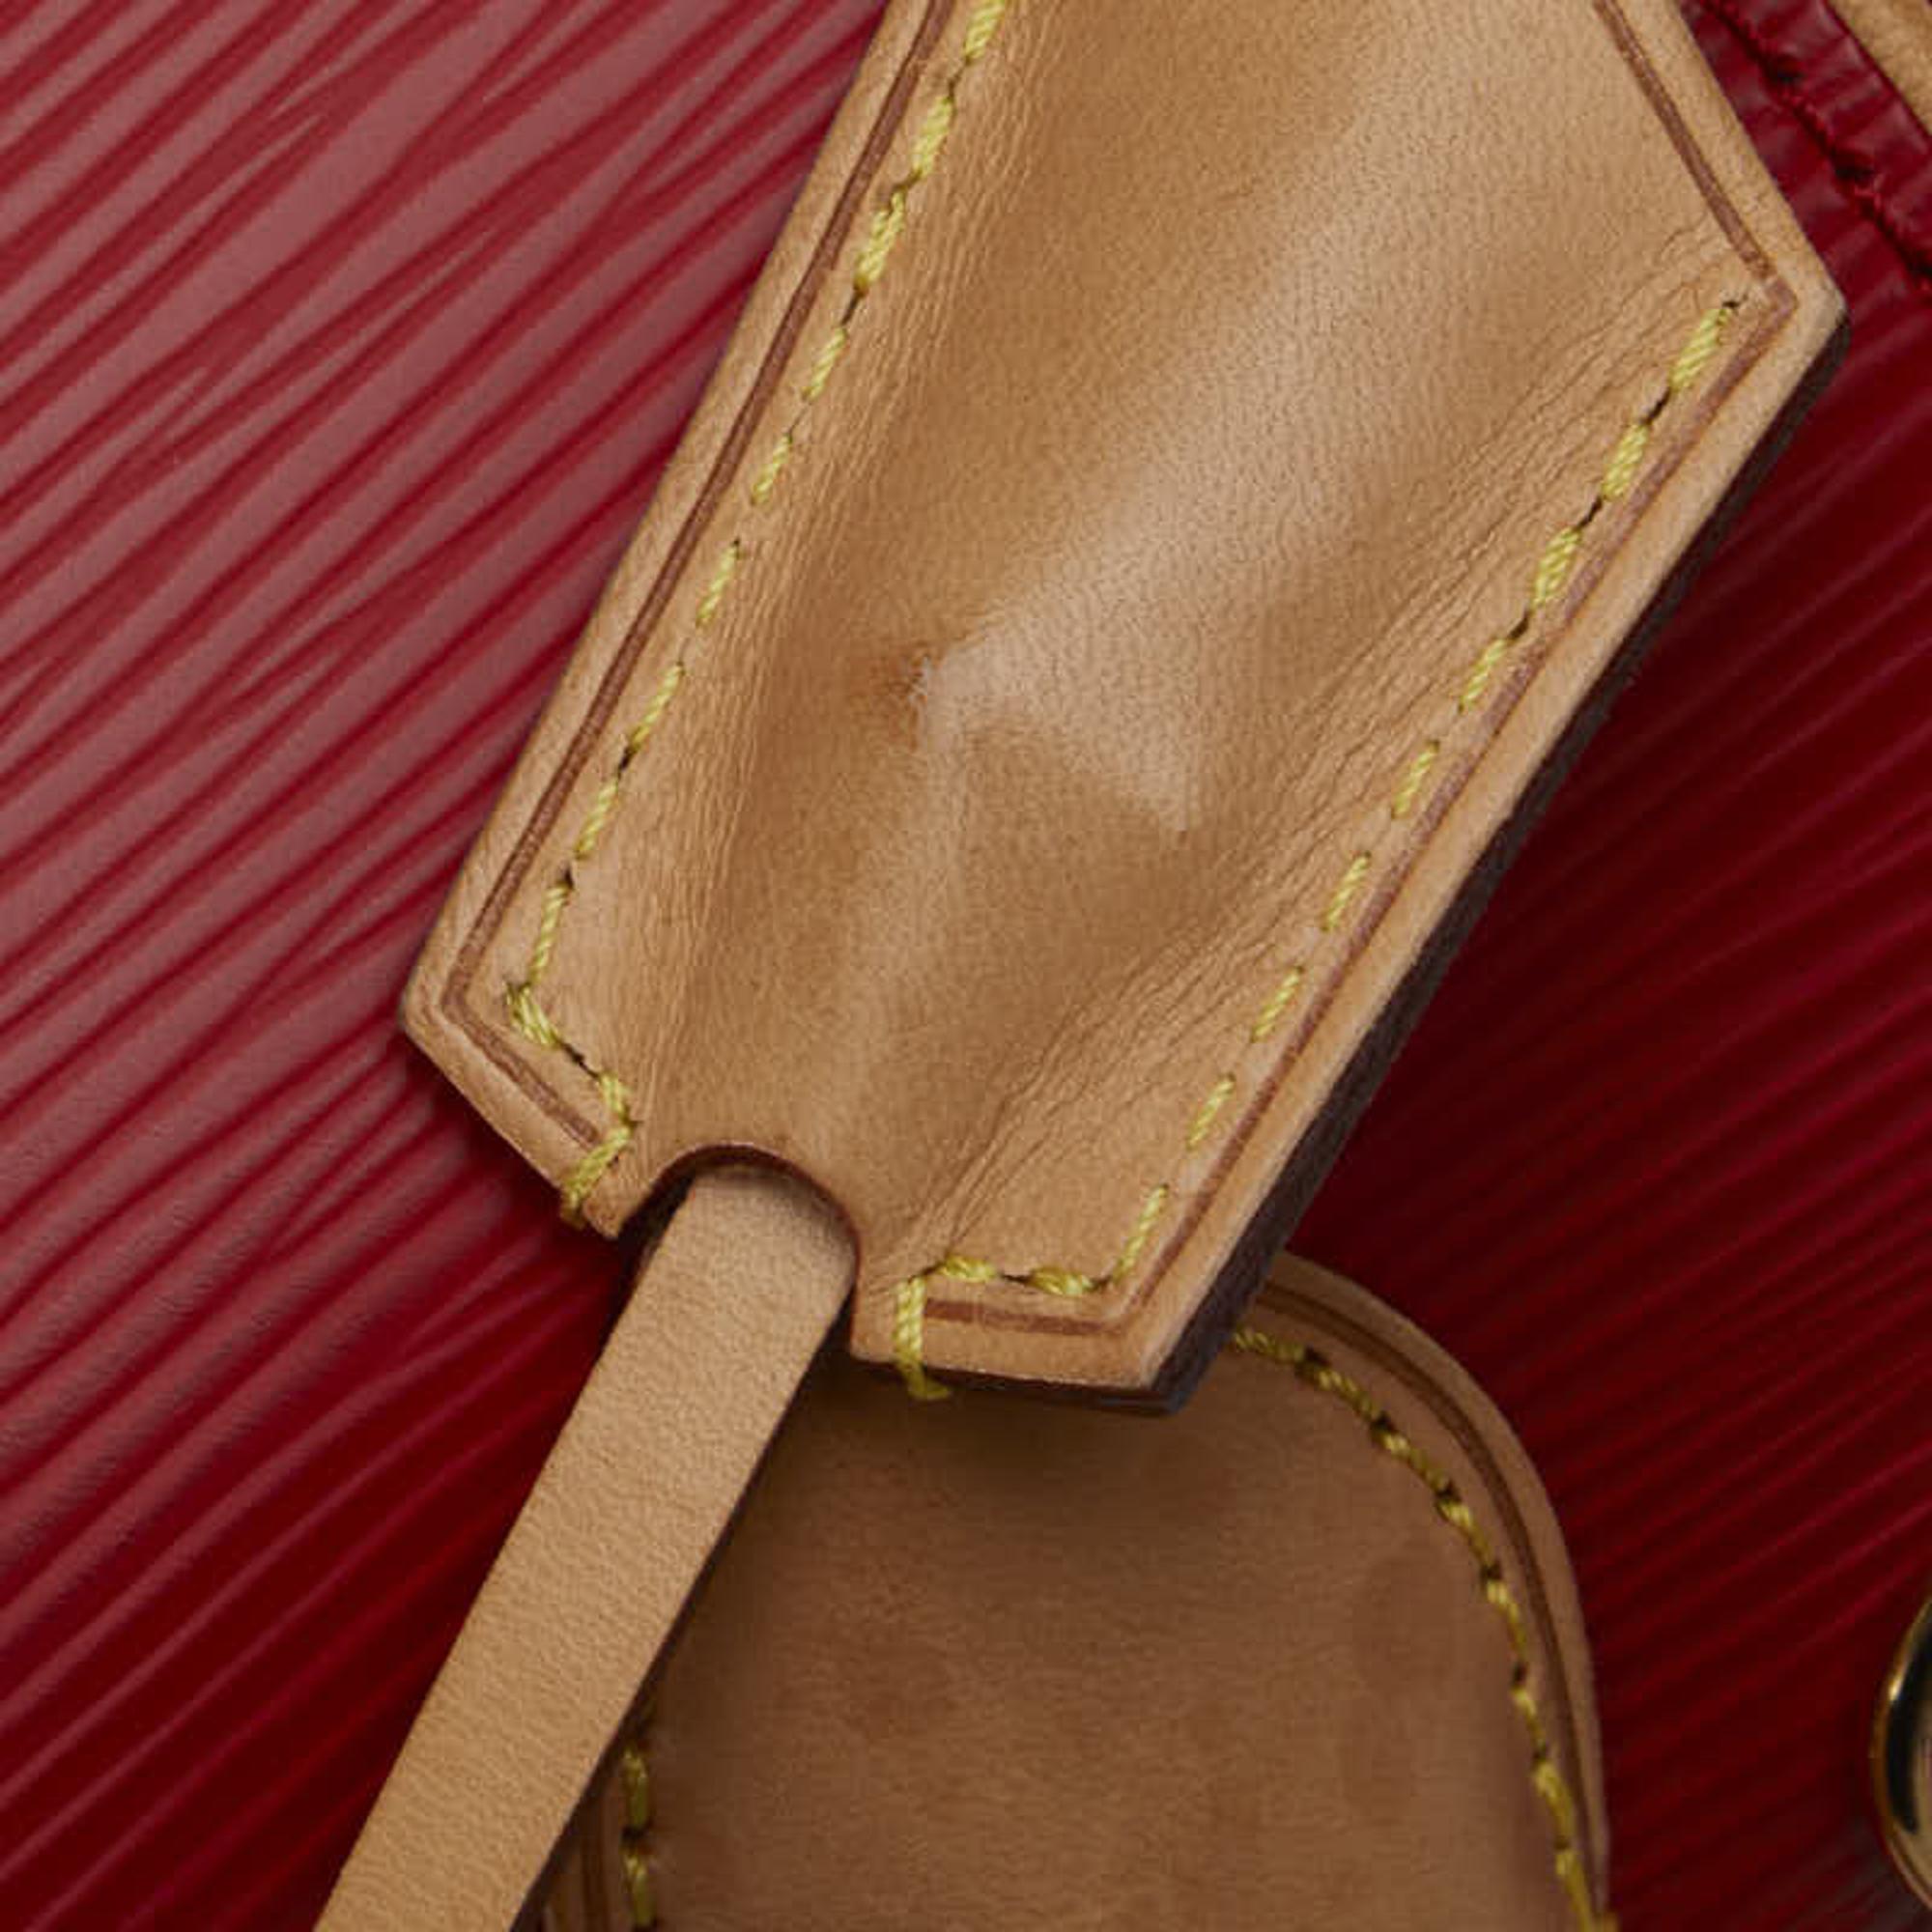 Louis Vuitton Red Leather Epi Doc BB Handbag